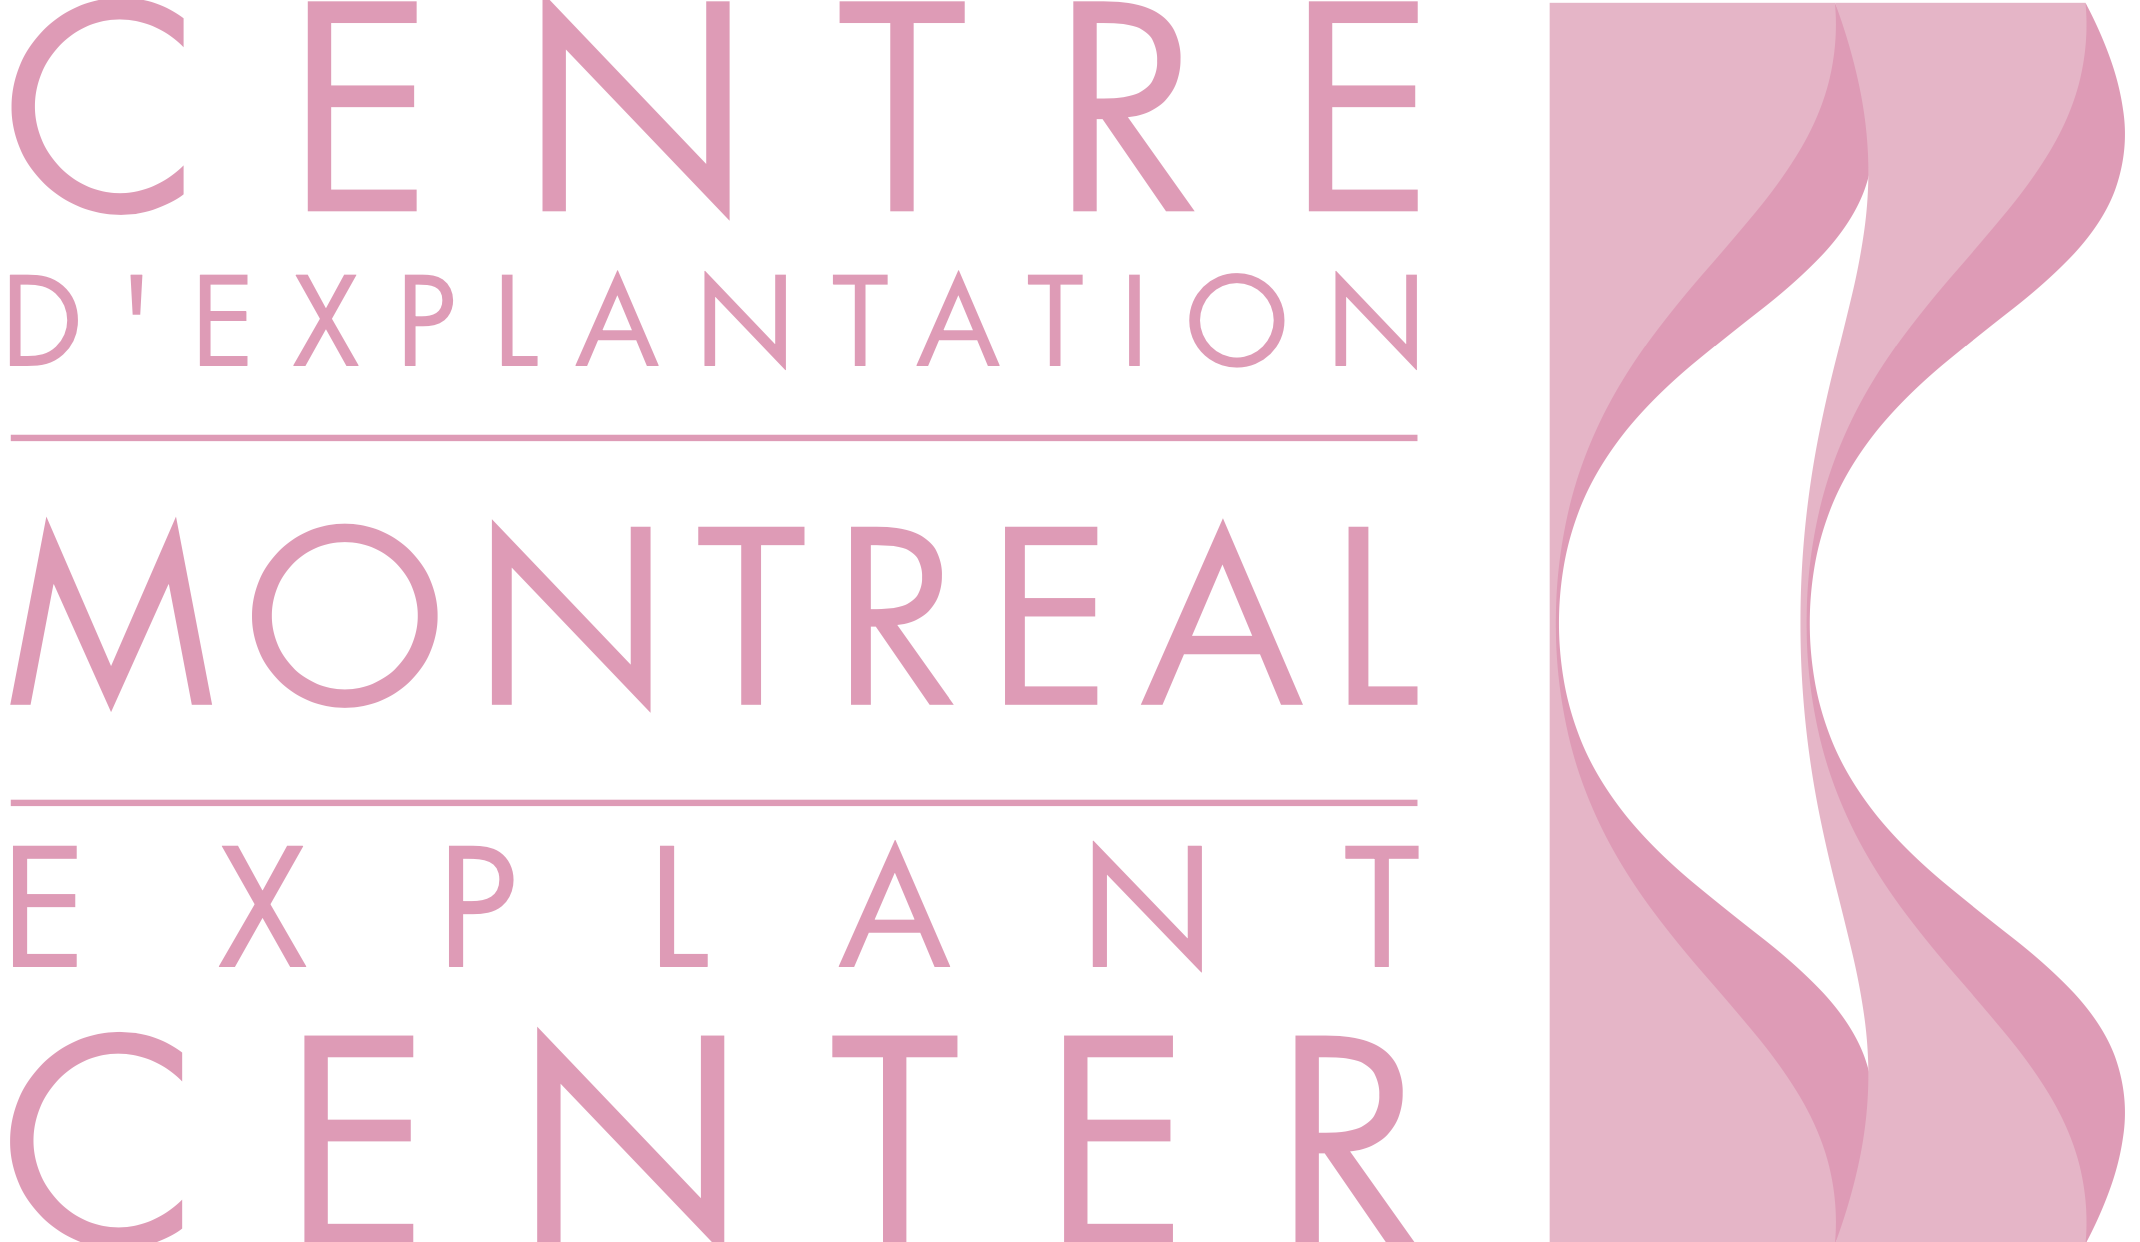 Montreal Explant Center